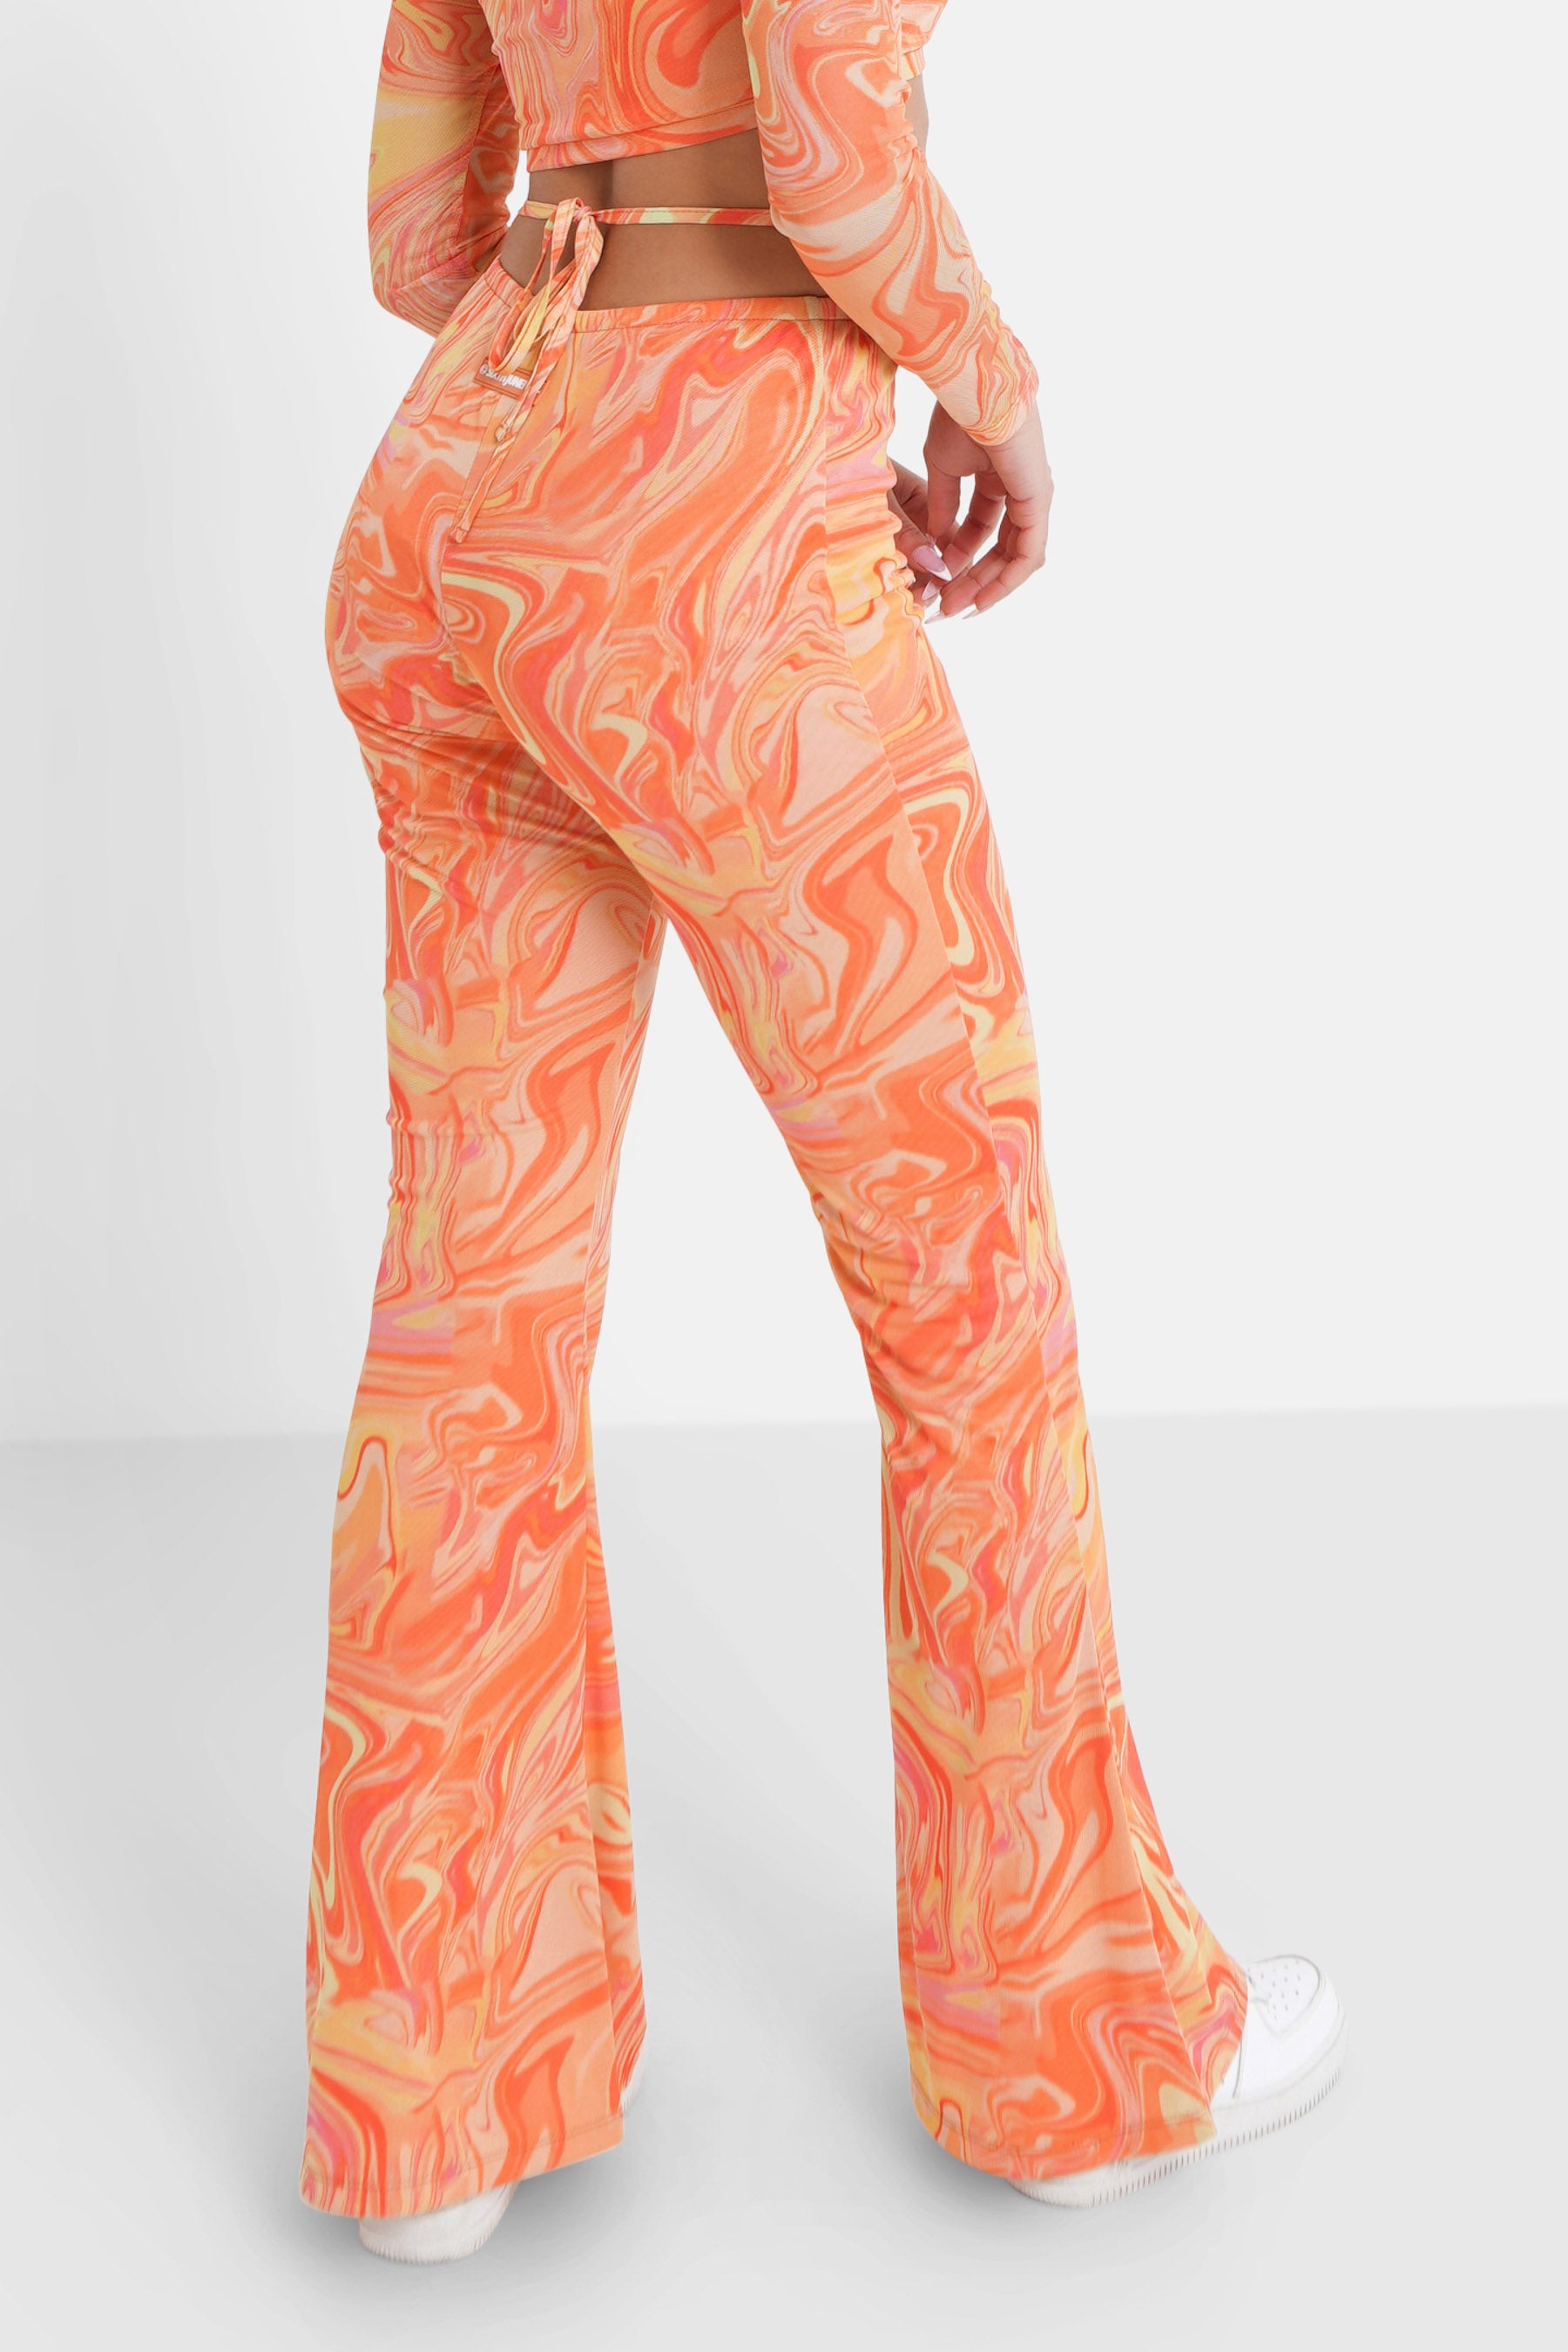 Ink mesh pants Orange